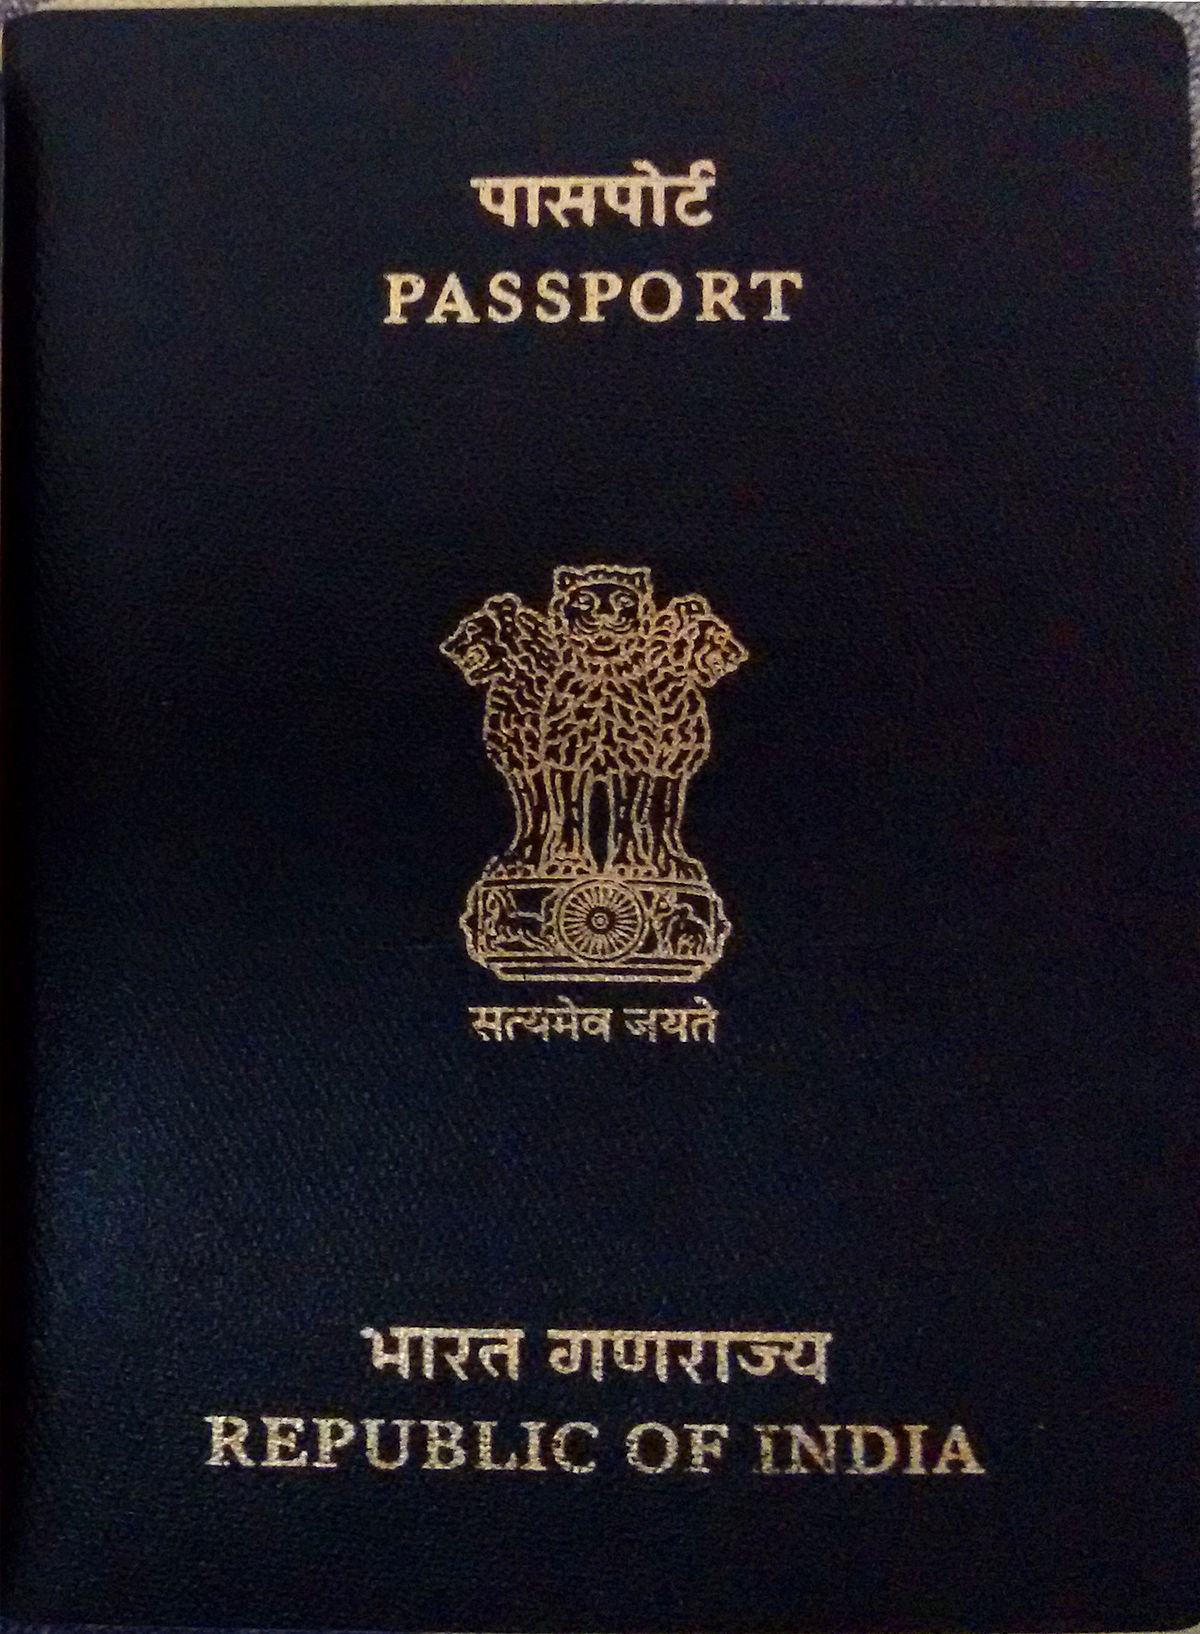 Indian passport - Wikipedia